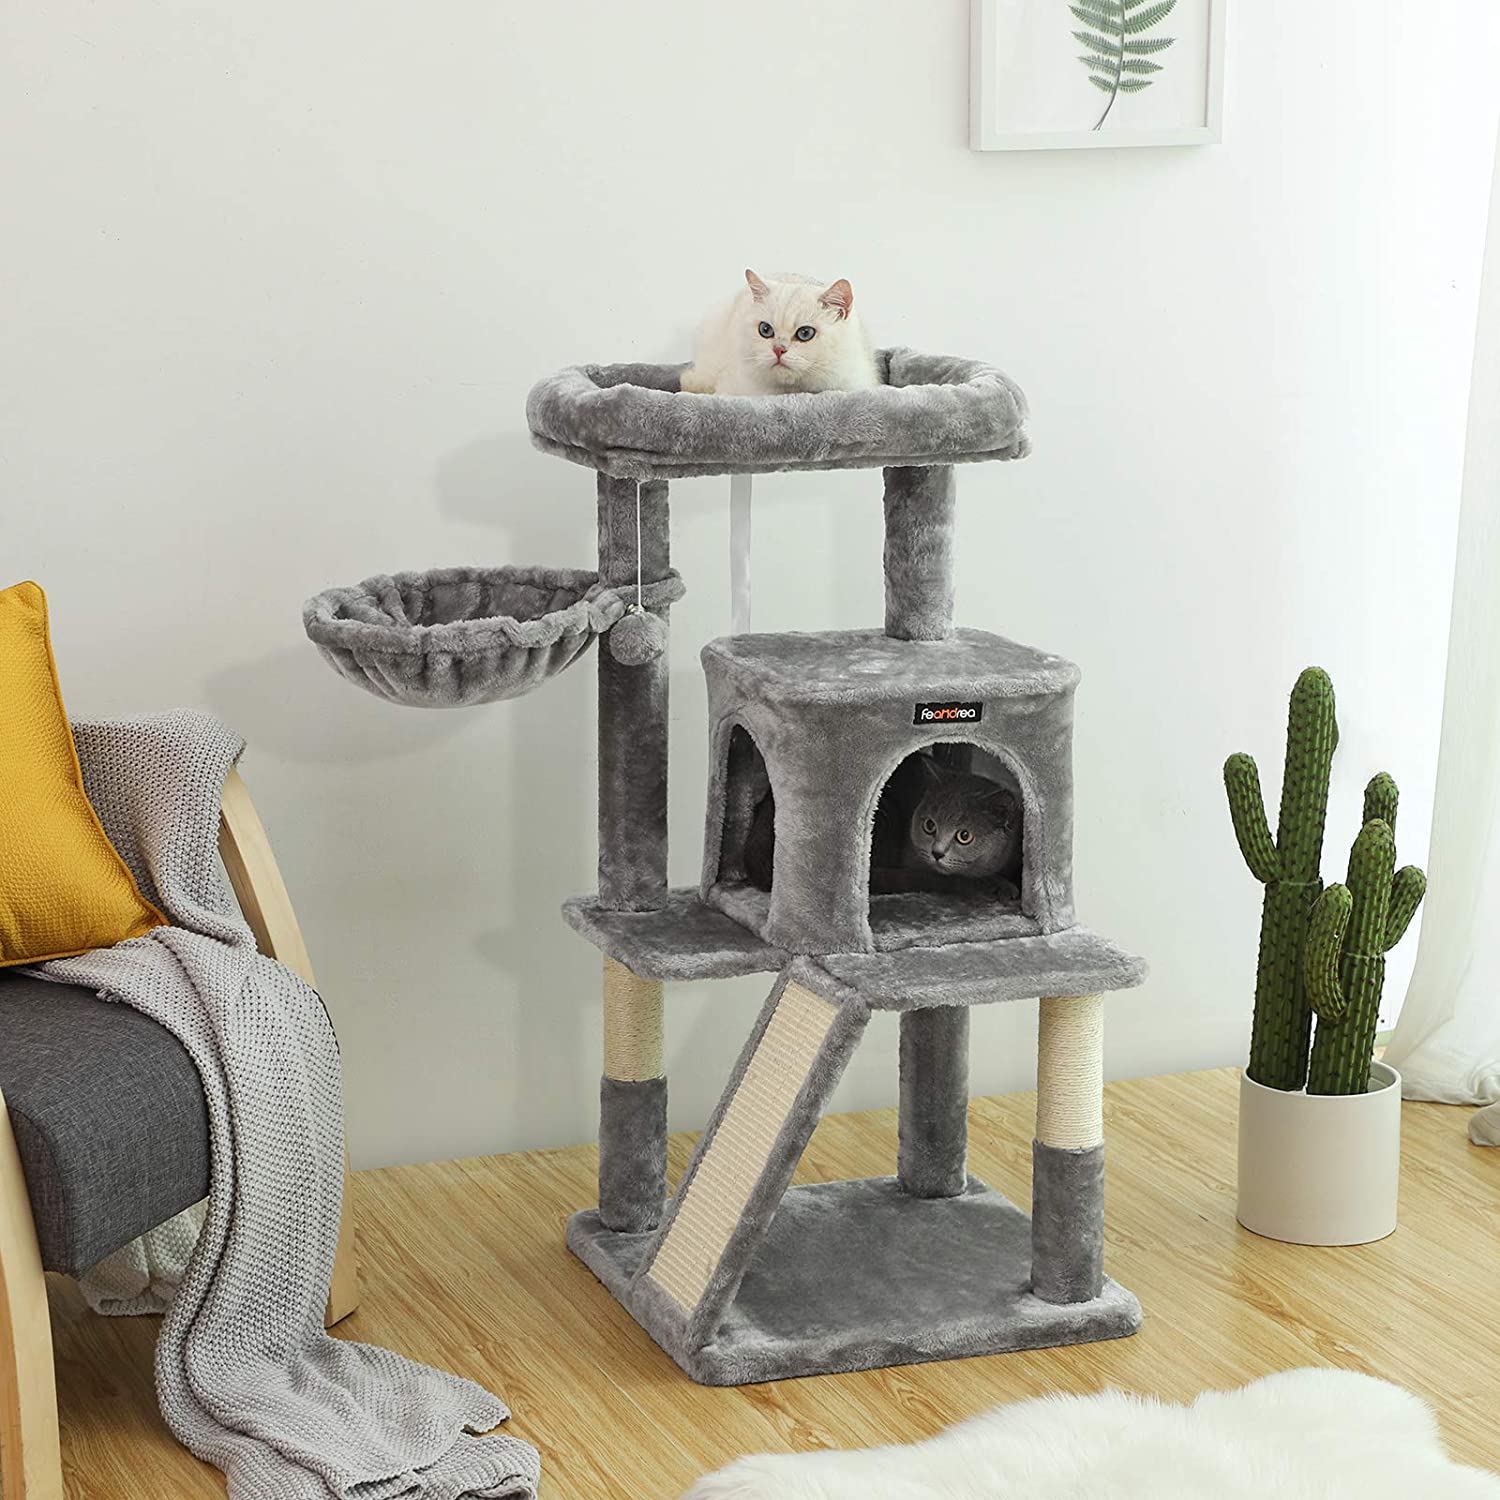 Nancy's Clallam Cat Tree - Cat House - Scratching Post - Scratching Posts for Cats - 48 x 48 x 96 cm (L x W x H)